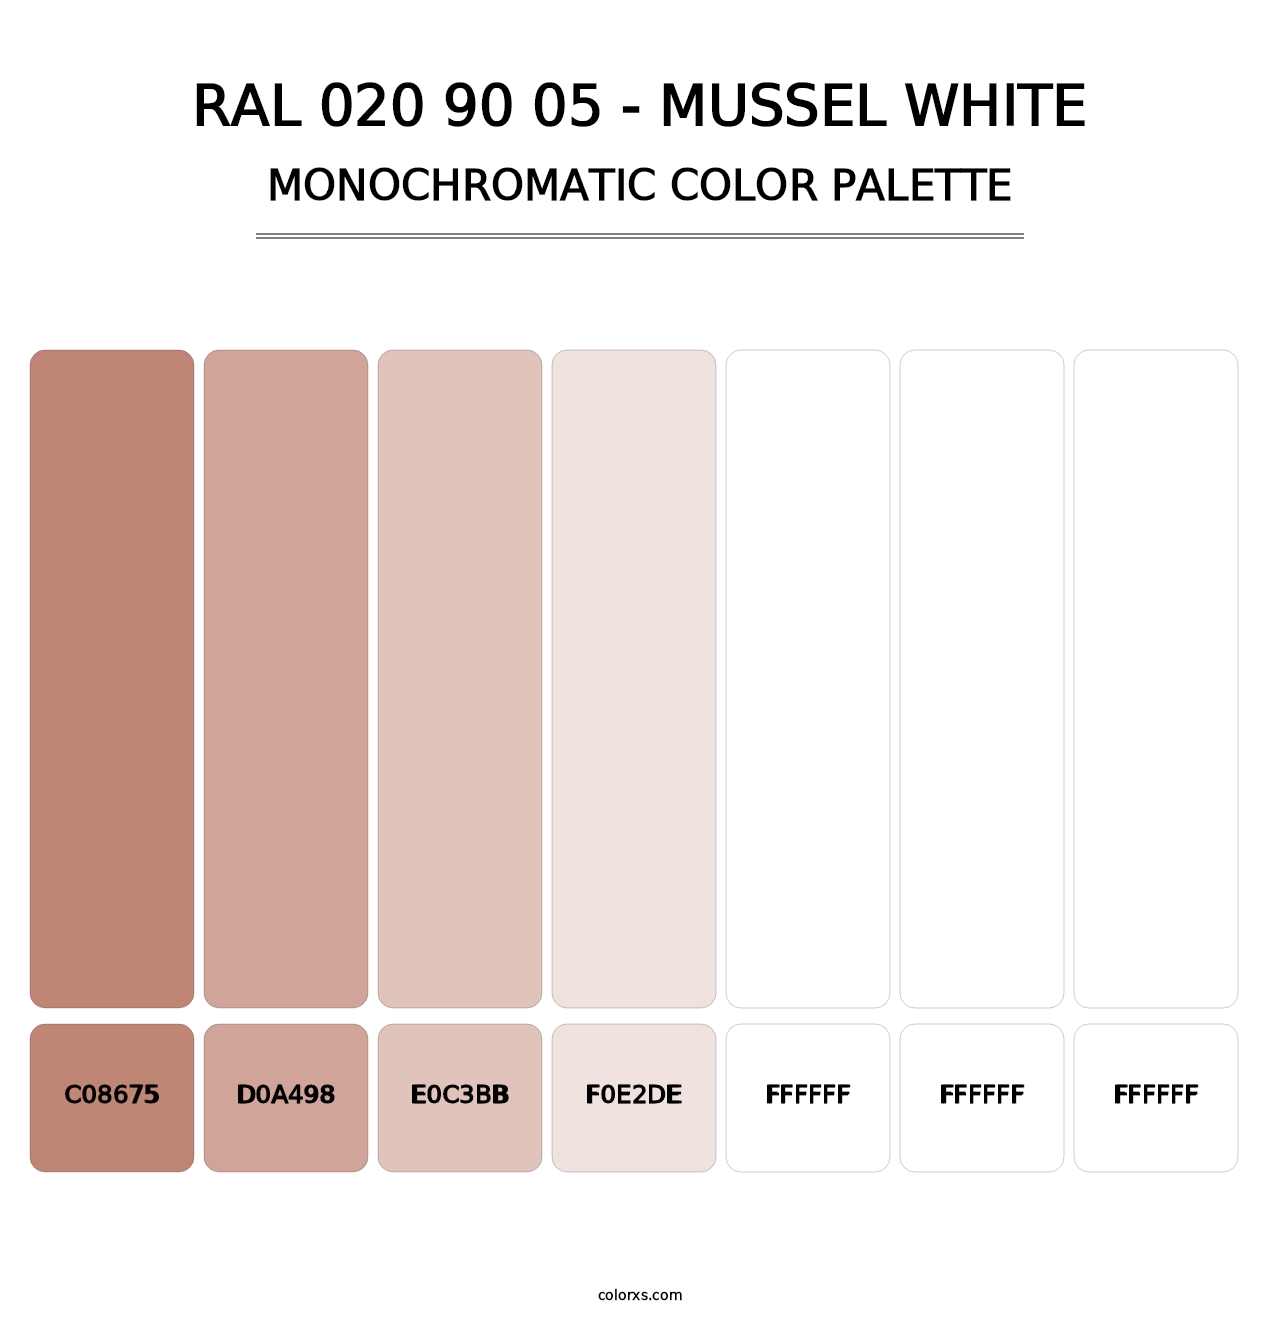 RAL 020 90 05 - Mussel White - Monochromatic Color Palette